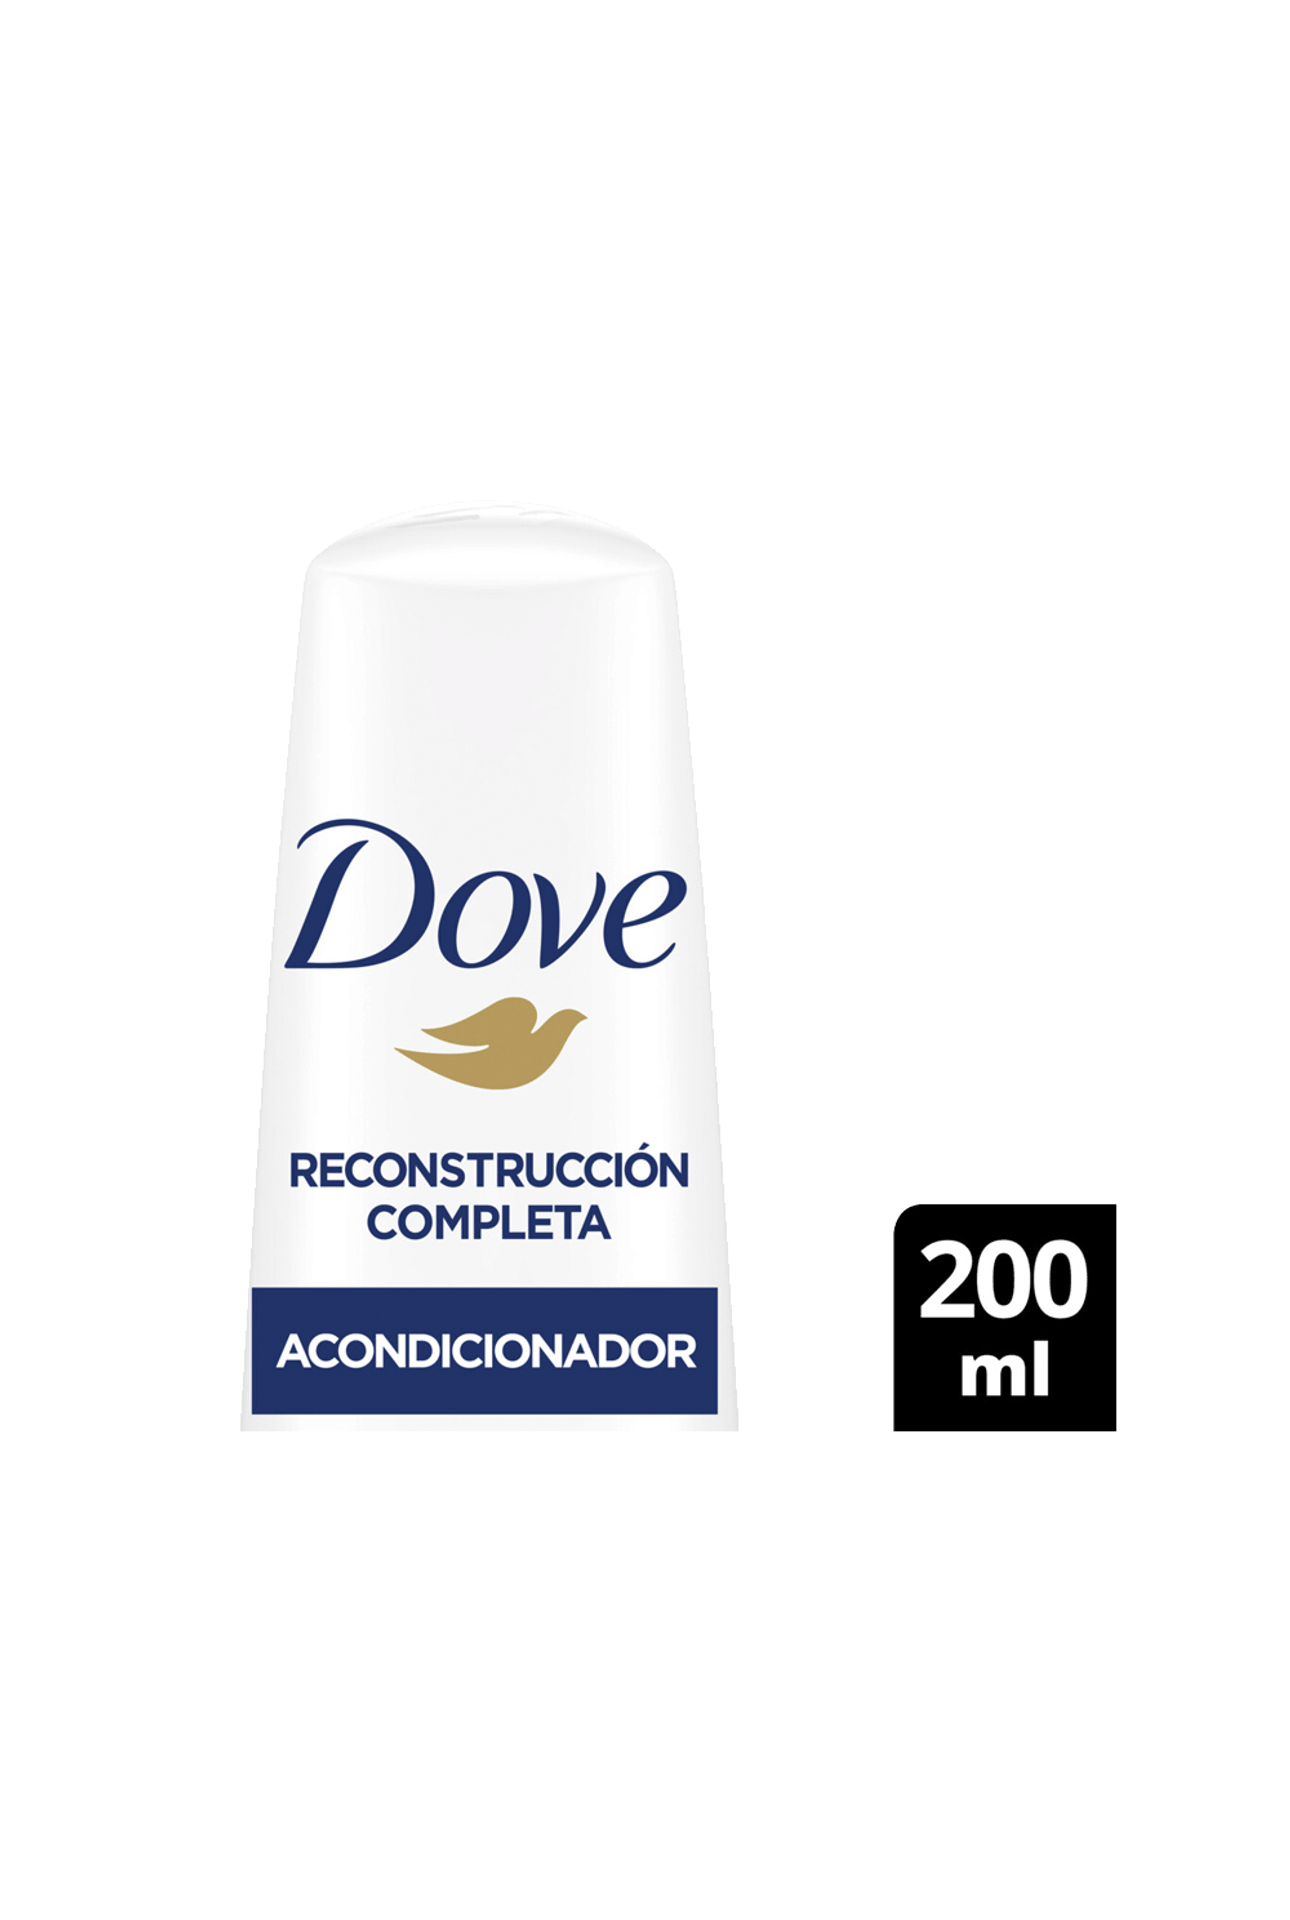 Dove-Acondicionador-Dove-Reconstruccion-Completa-x-200ml-7791293047058_img1